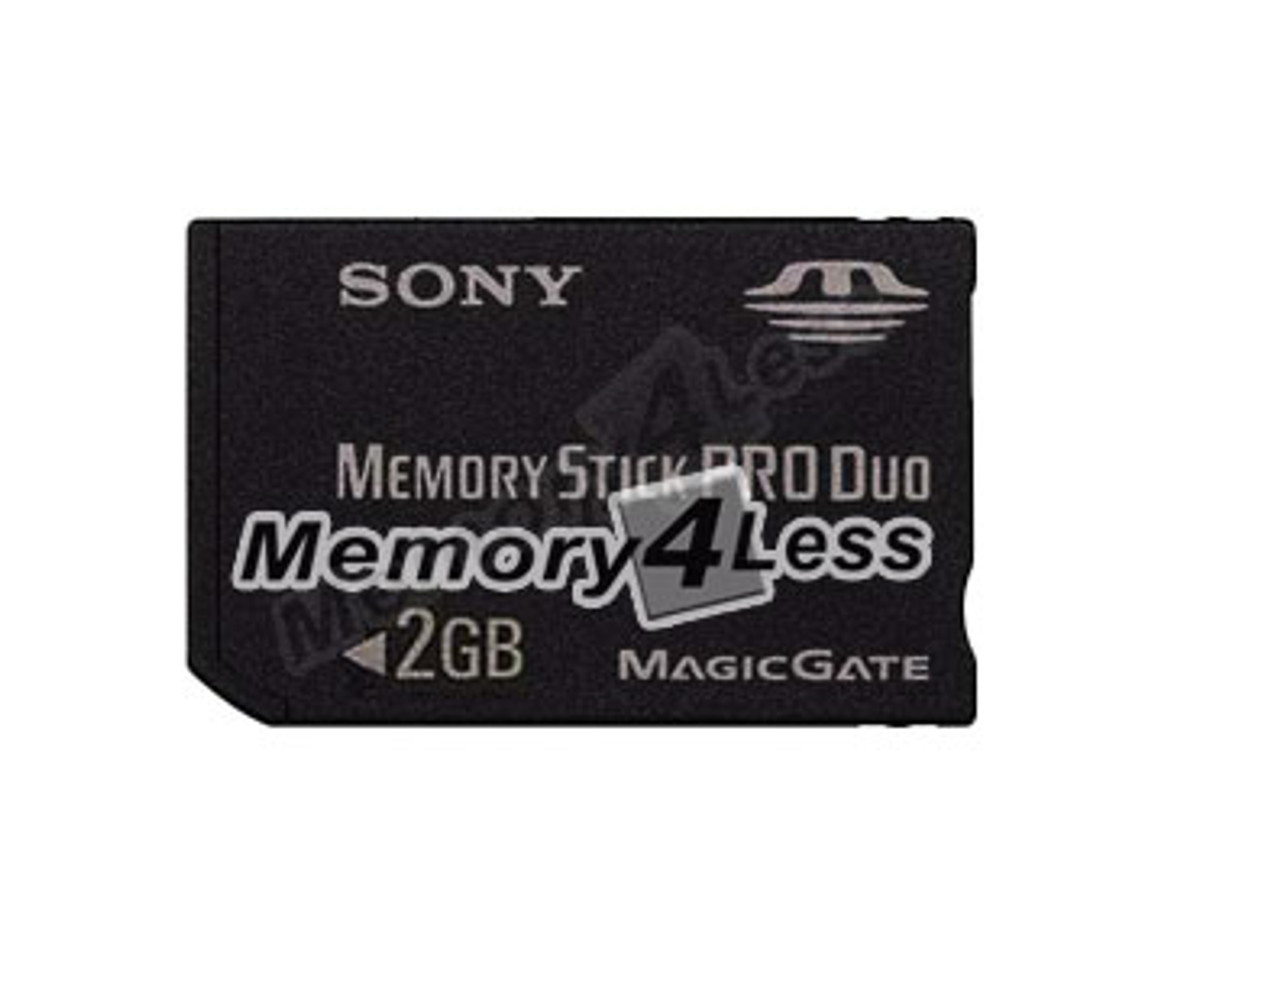 MSX-M2GS Sony 2GB Pro Duo Memory Stick Flash Card